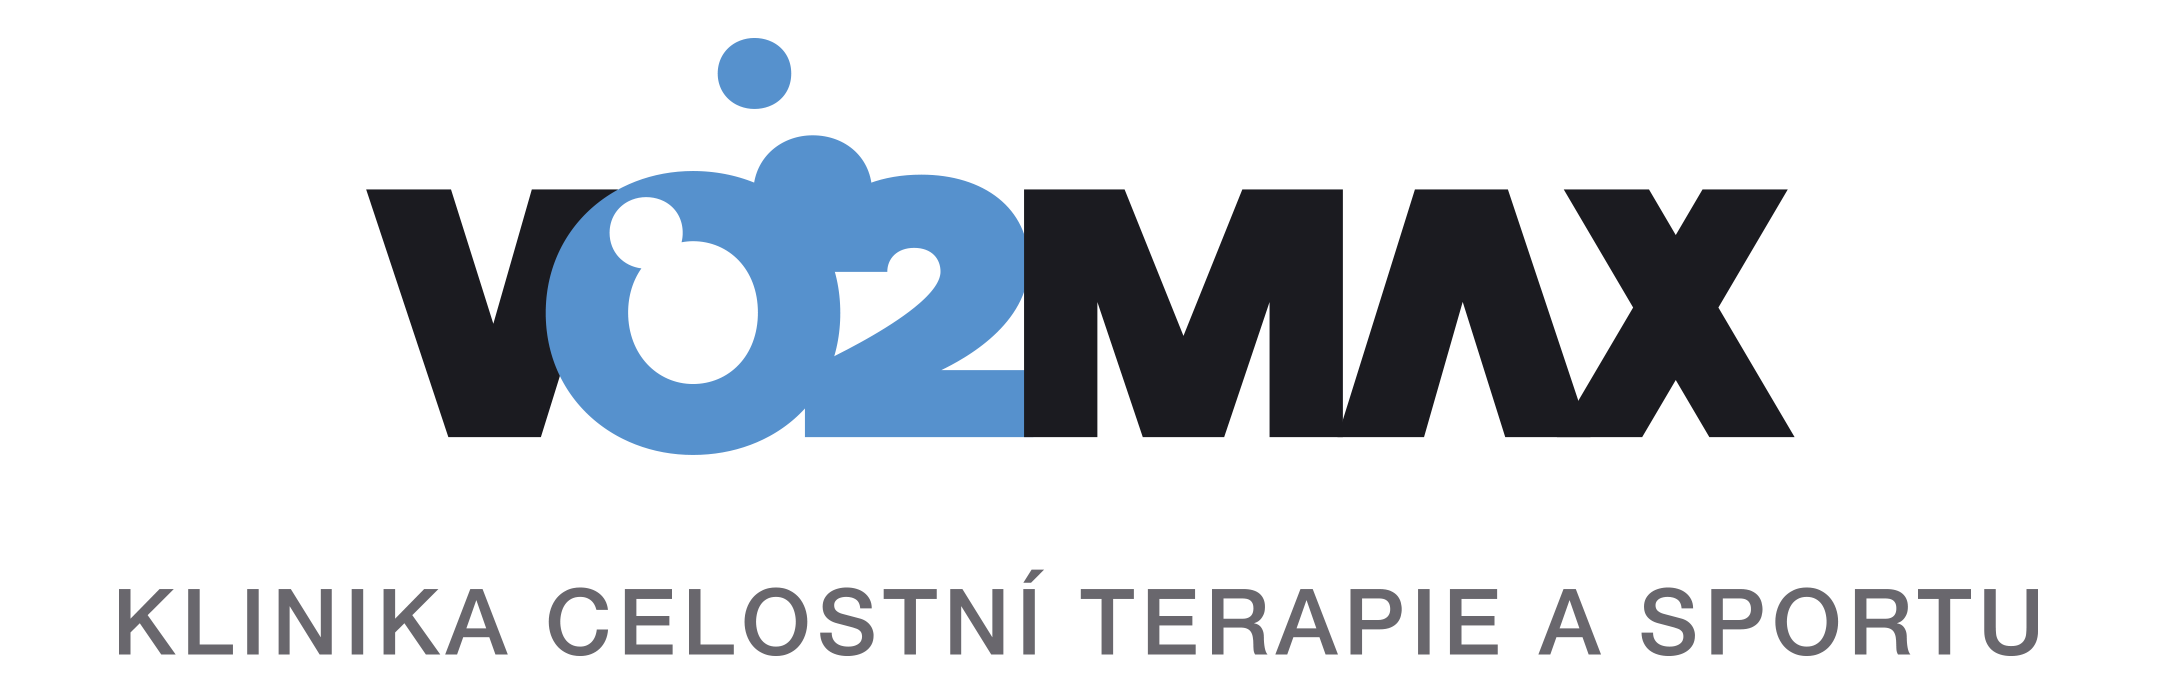 VO2MAX logo